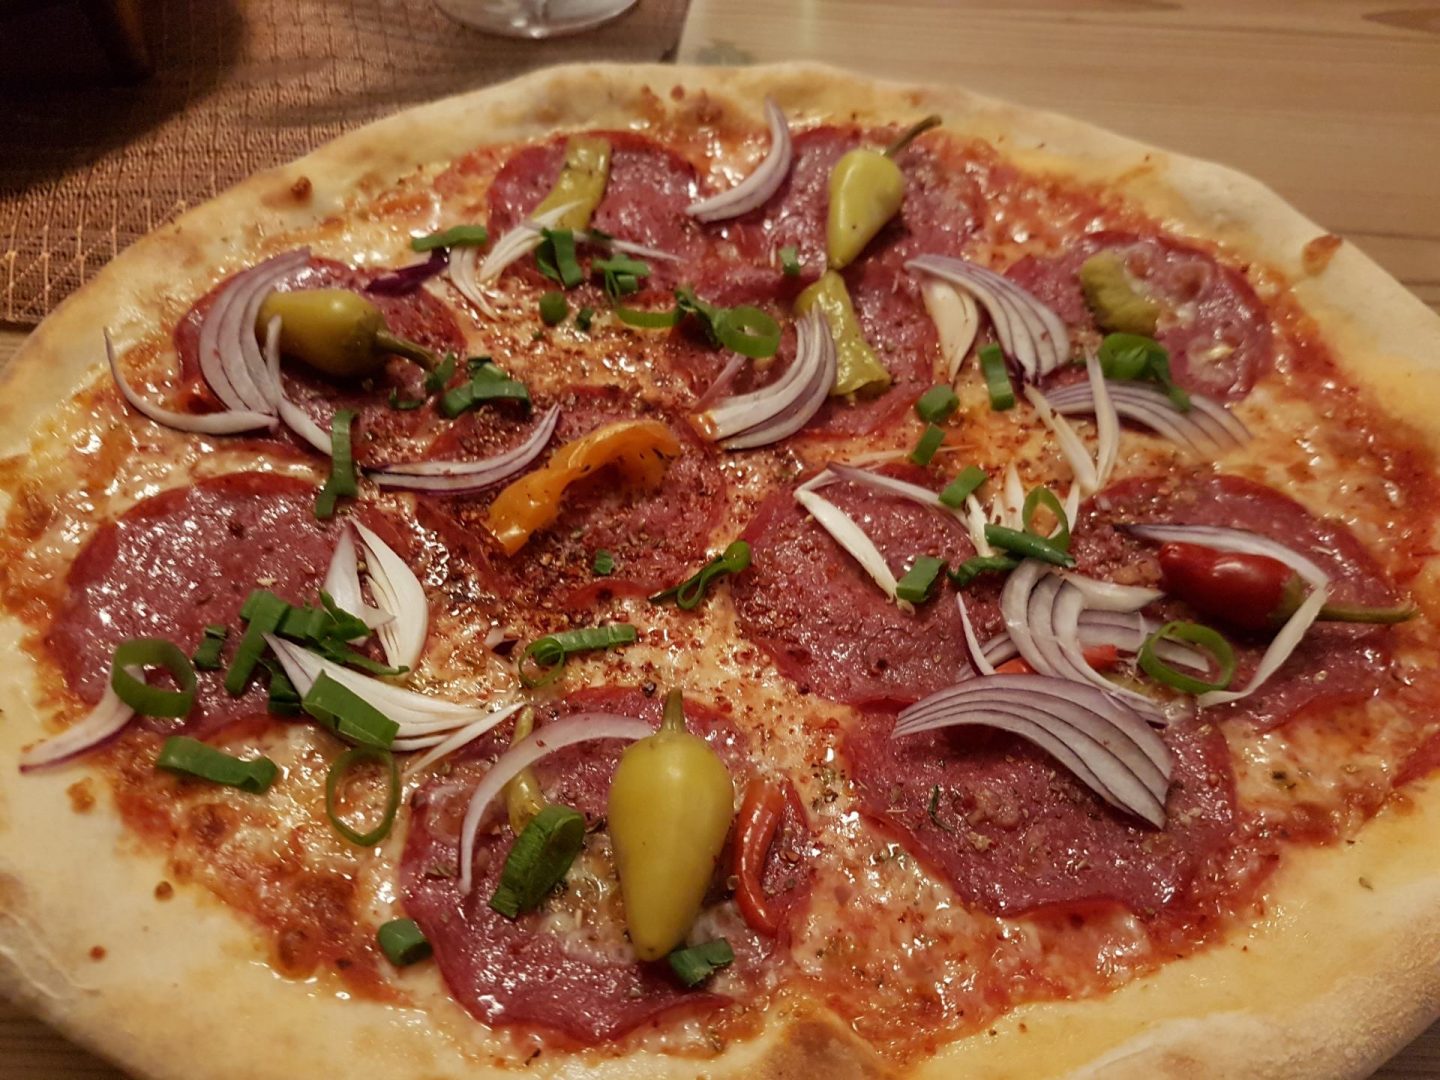 Erfahrung Bewertung Kritik Pizzeria Palas Reith im Alpbachtal Skijuwel Foodblog Sternestulle